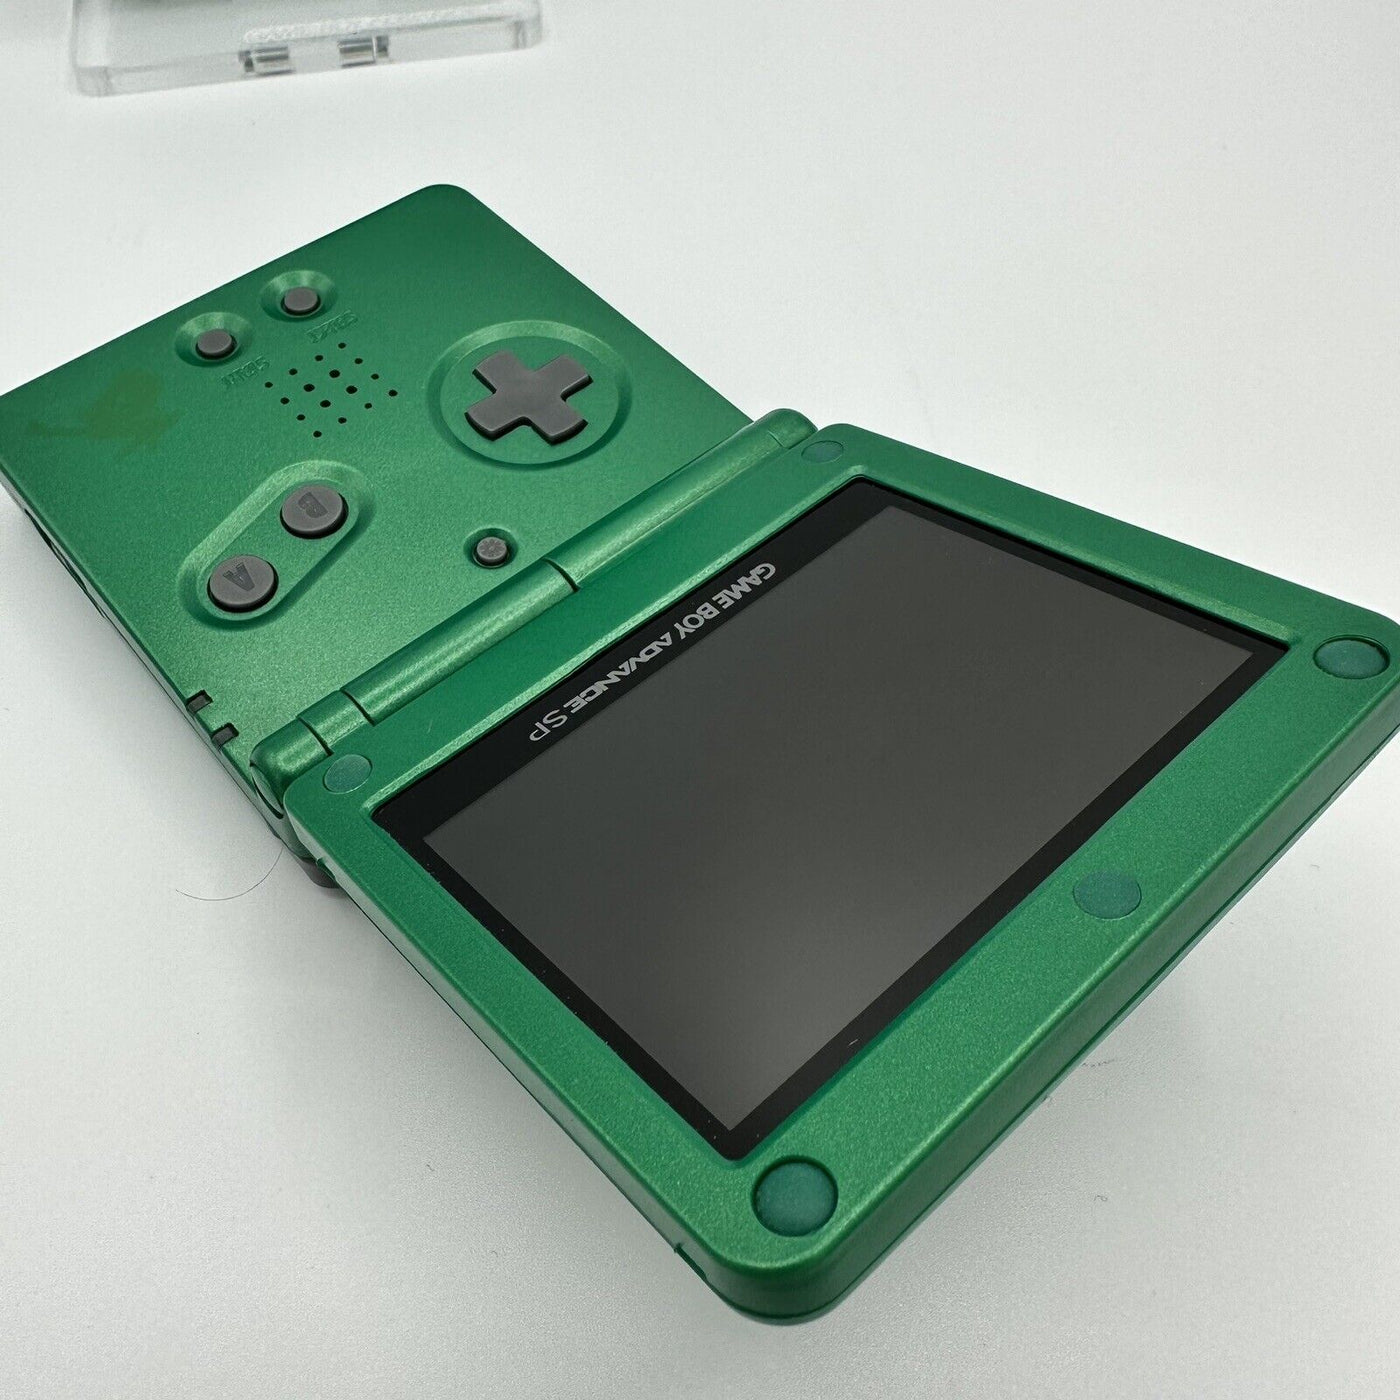 Game Boy Advance SP Console - Rayquaza Emerald Edition